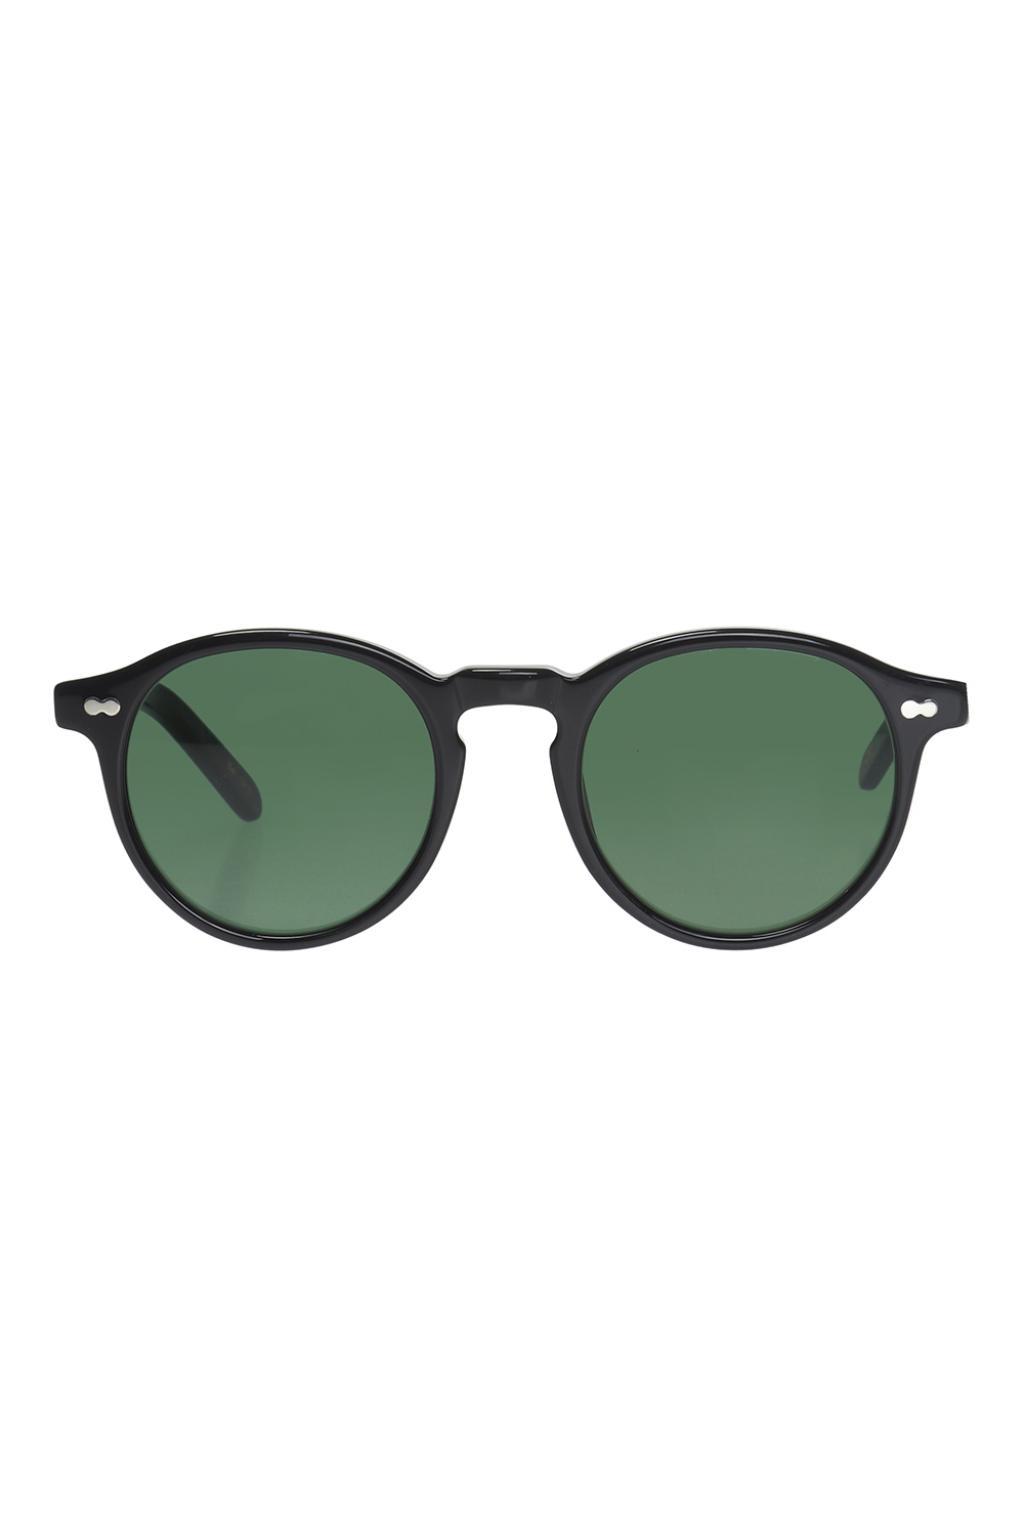 Moscot 'miltzen' Sunglasses in Black for Men - Lyst